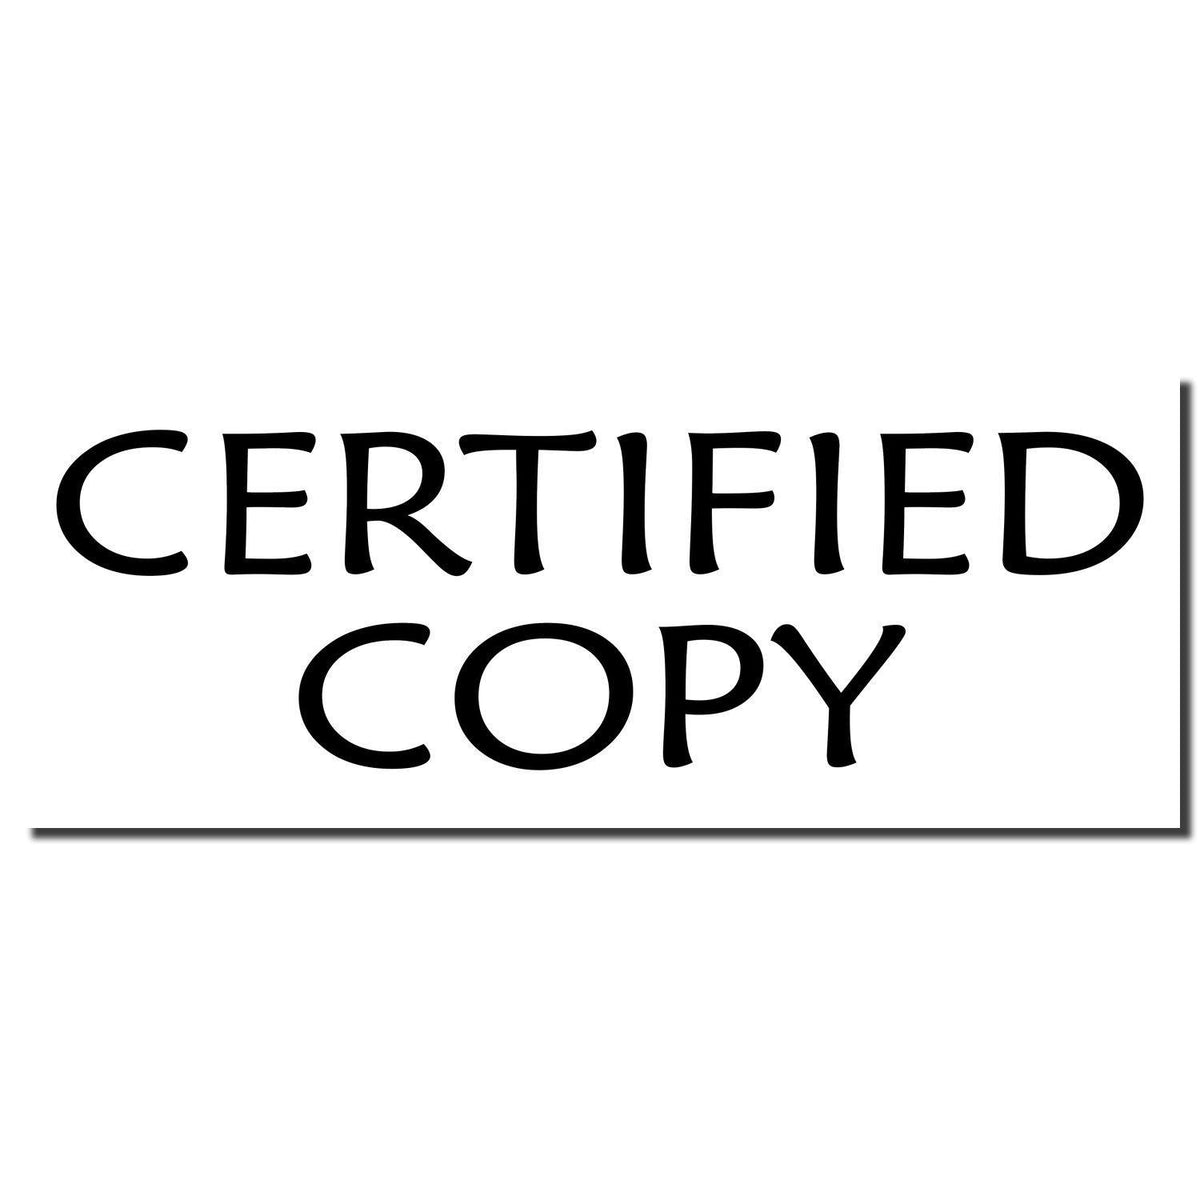 Enlarged Imprint Certified Copy Rubber Stamp Sample